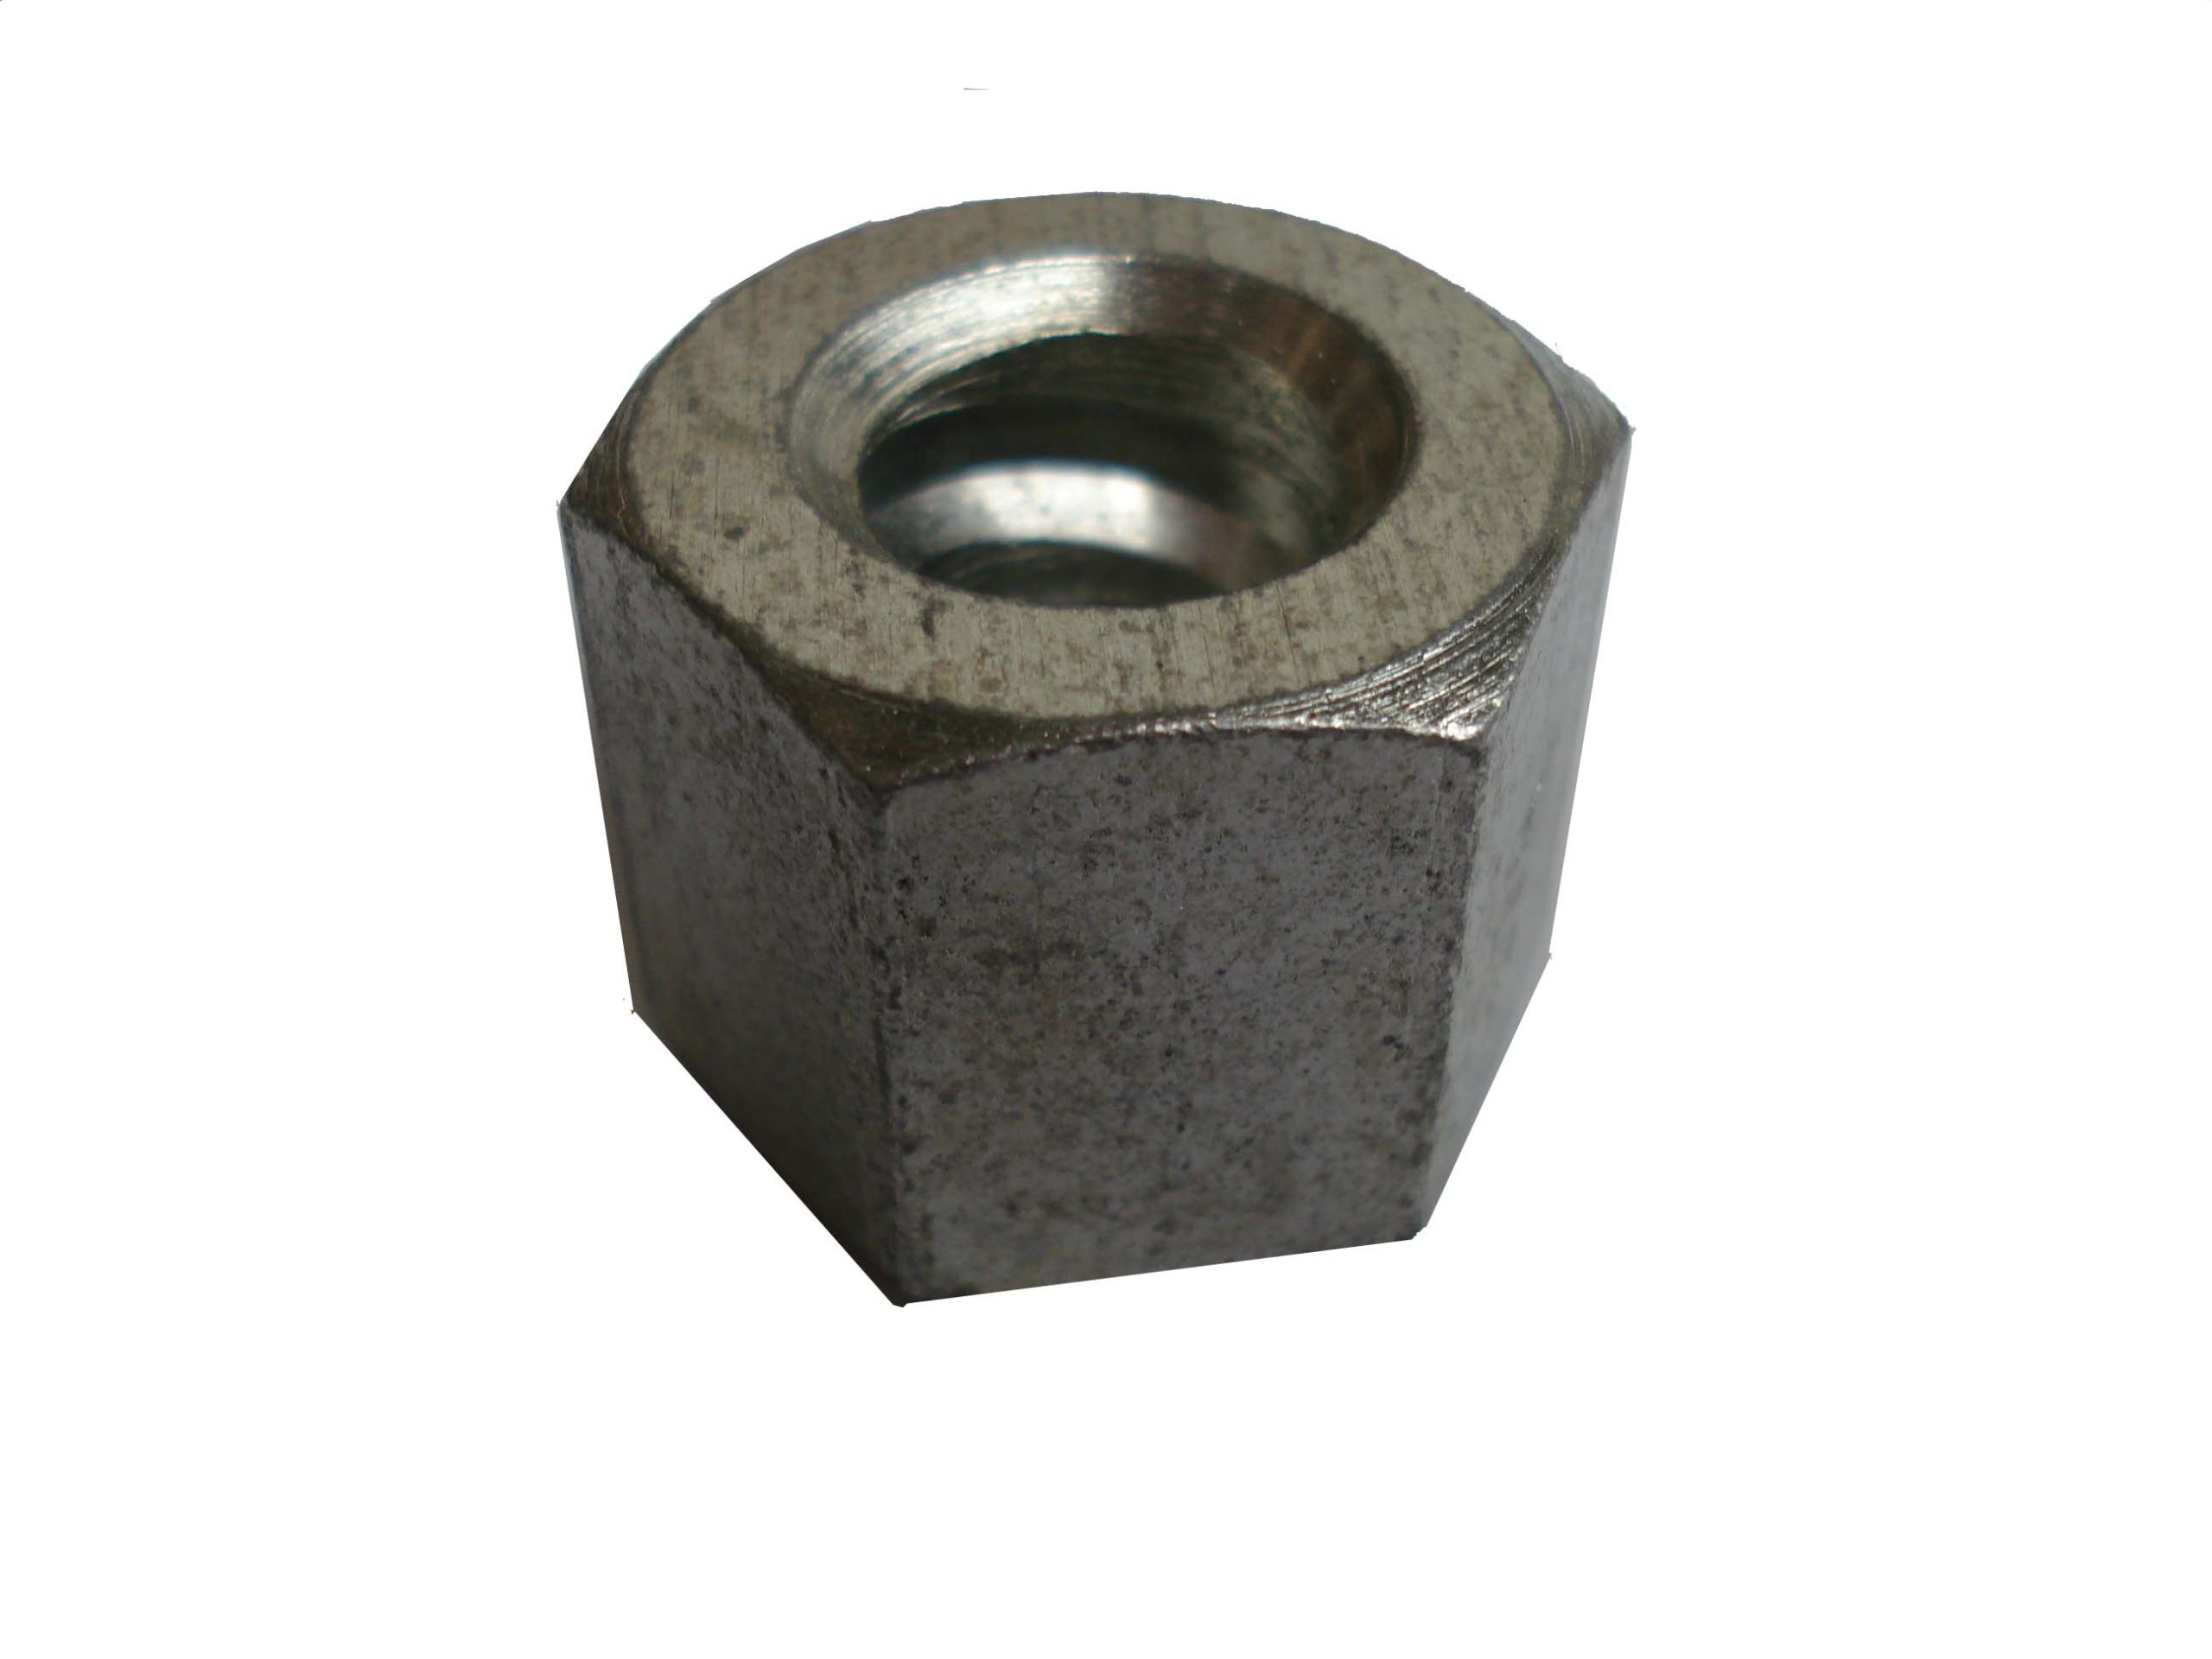 Écrous hexagonaux acier • Trapezoidales - Machinefabriek